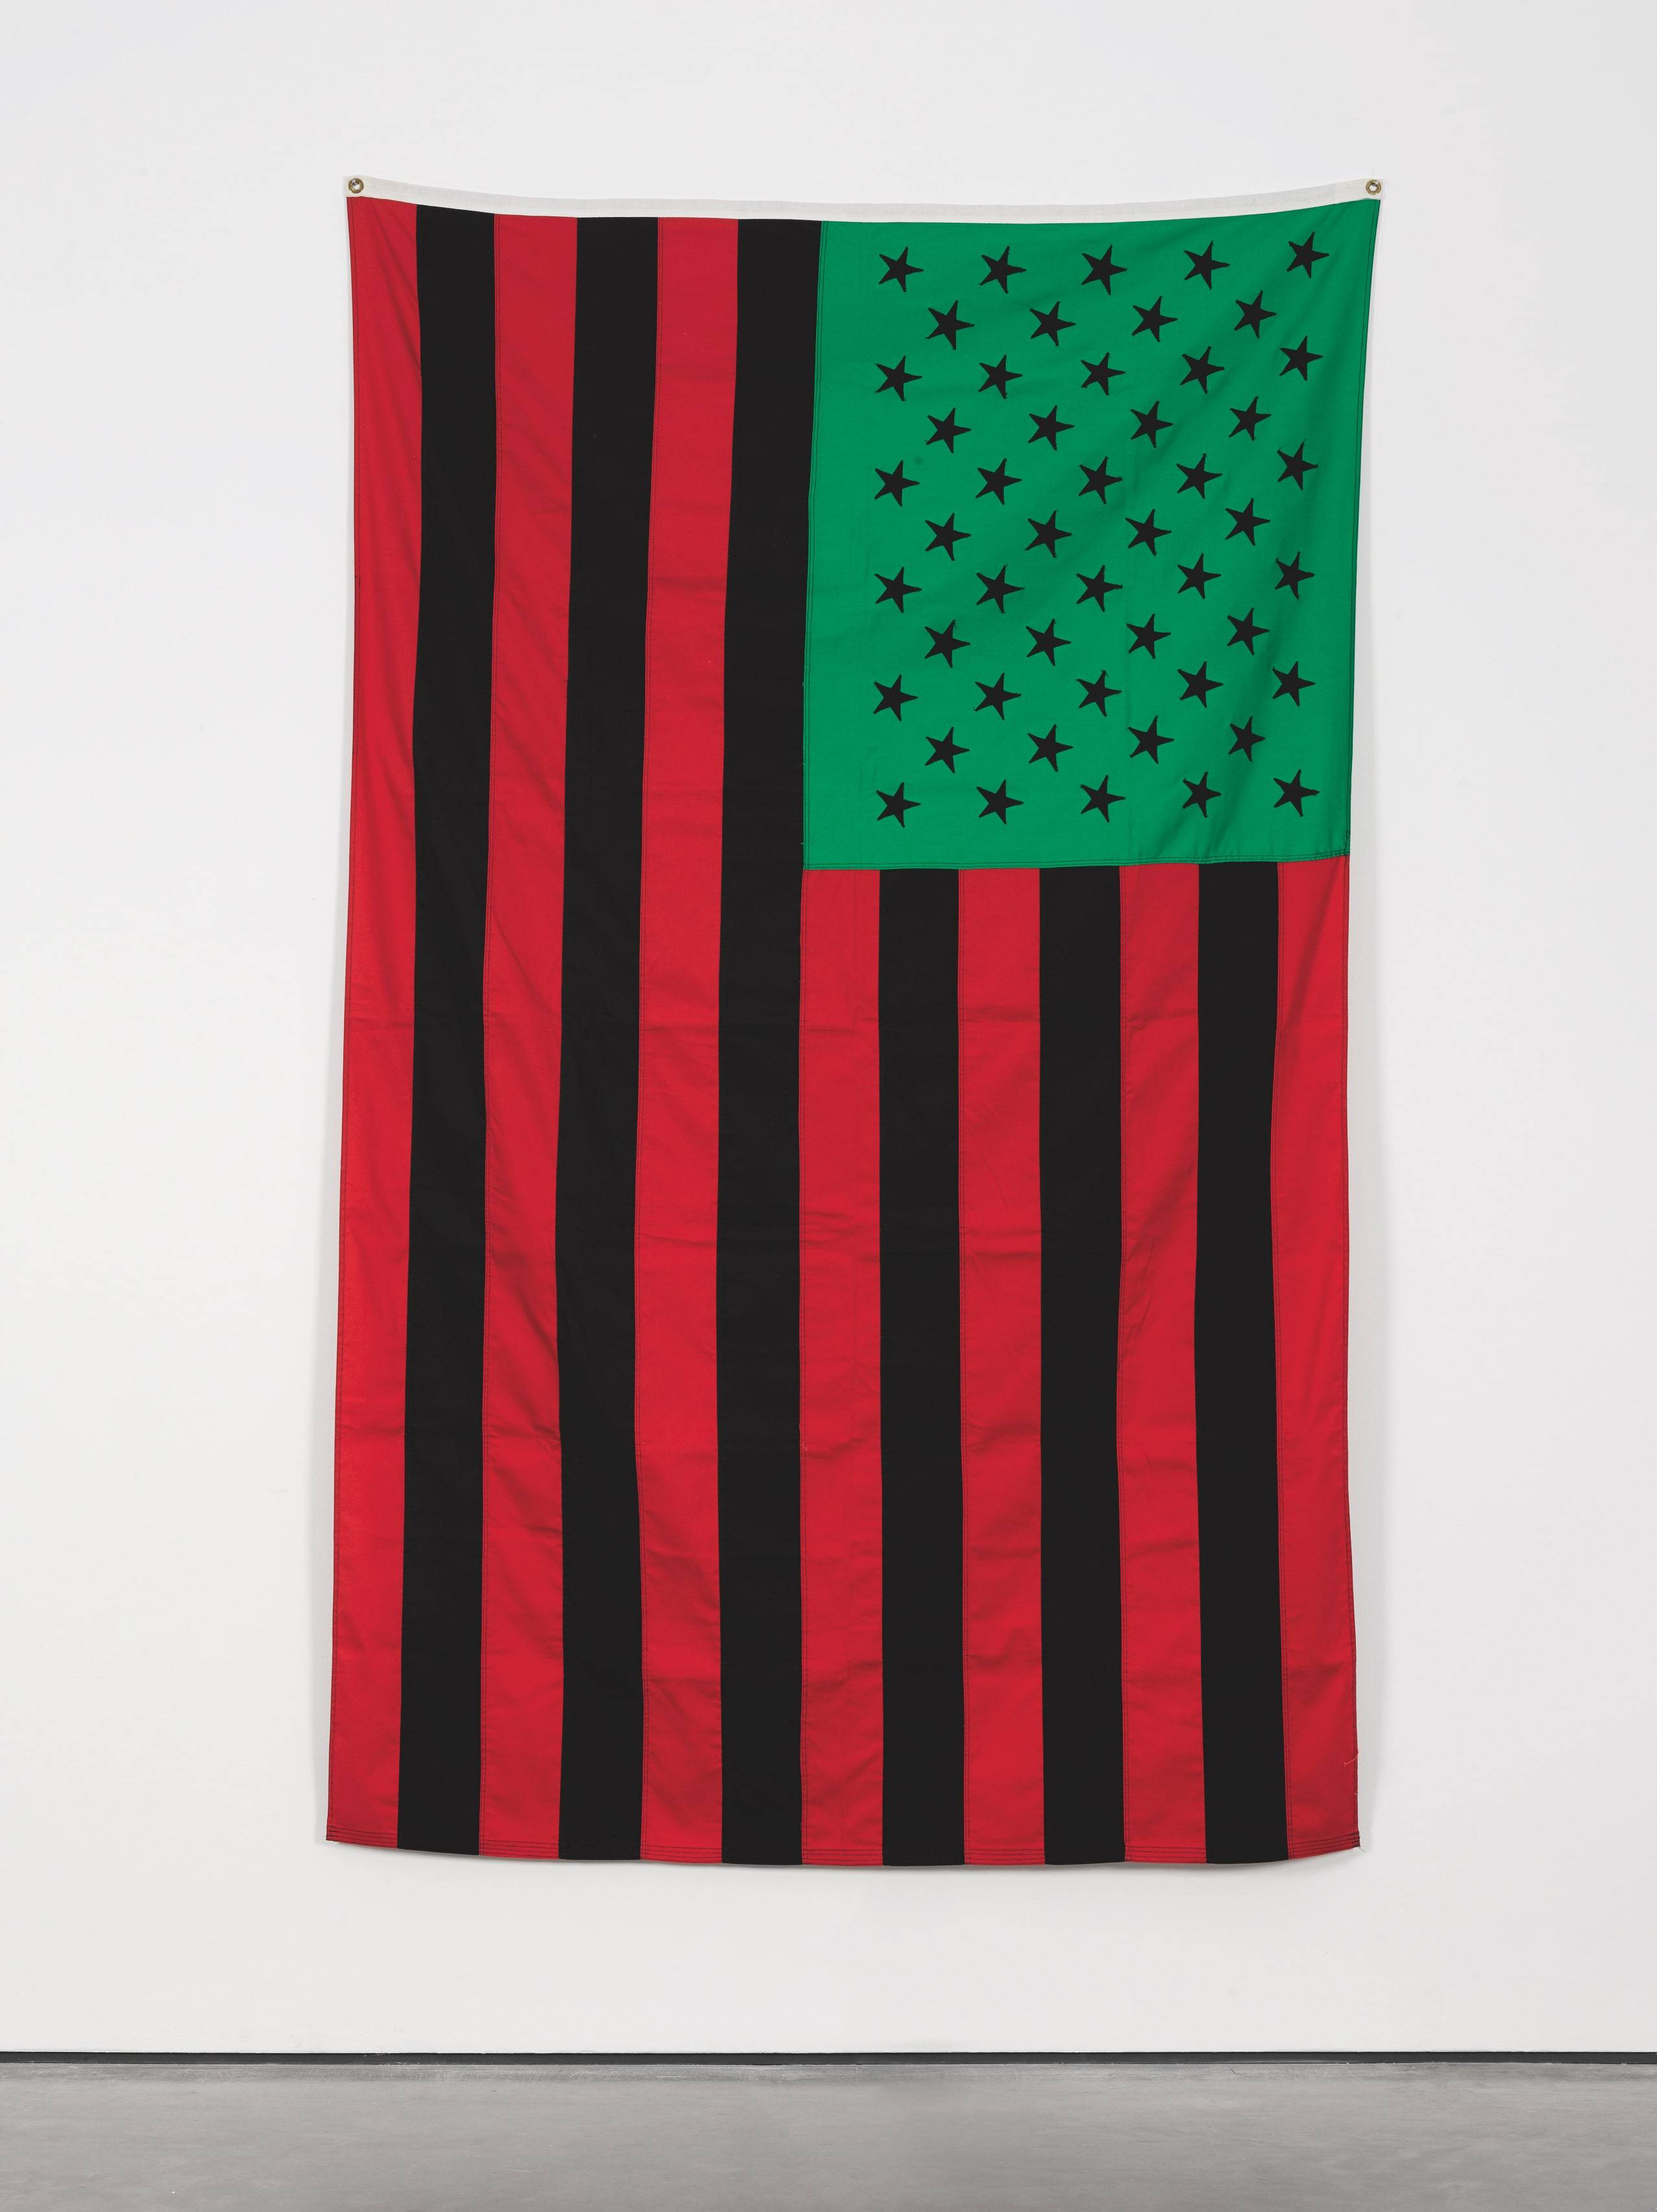 AFRICAN AMERICAN FLAG (1989). TISSU COUSU, 153,7 X 245,7 CM.
David Hammons. Photo : Genevieve Hanson. Courtesy David Hammons and Hauser & Wirth